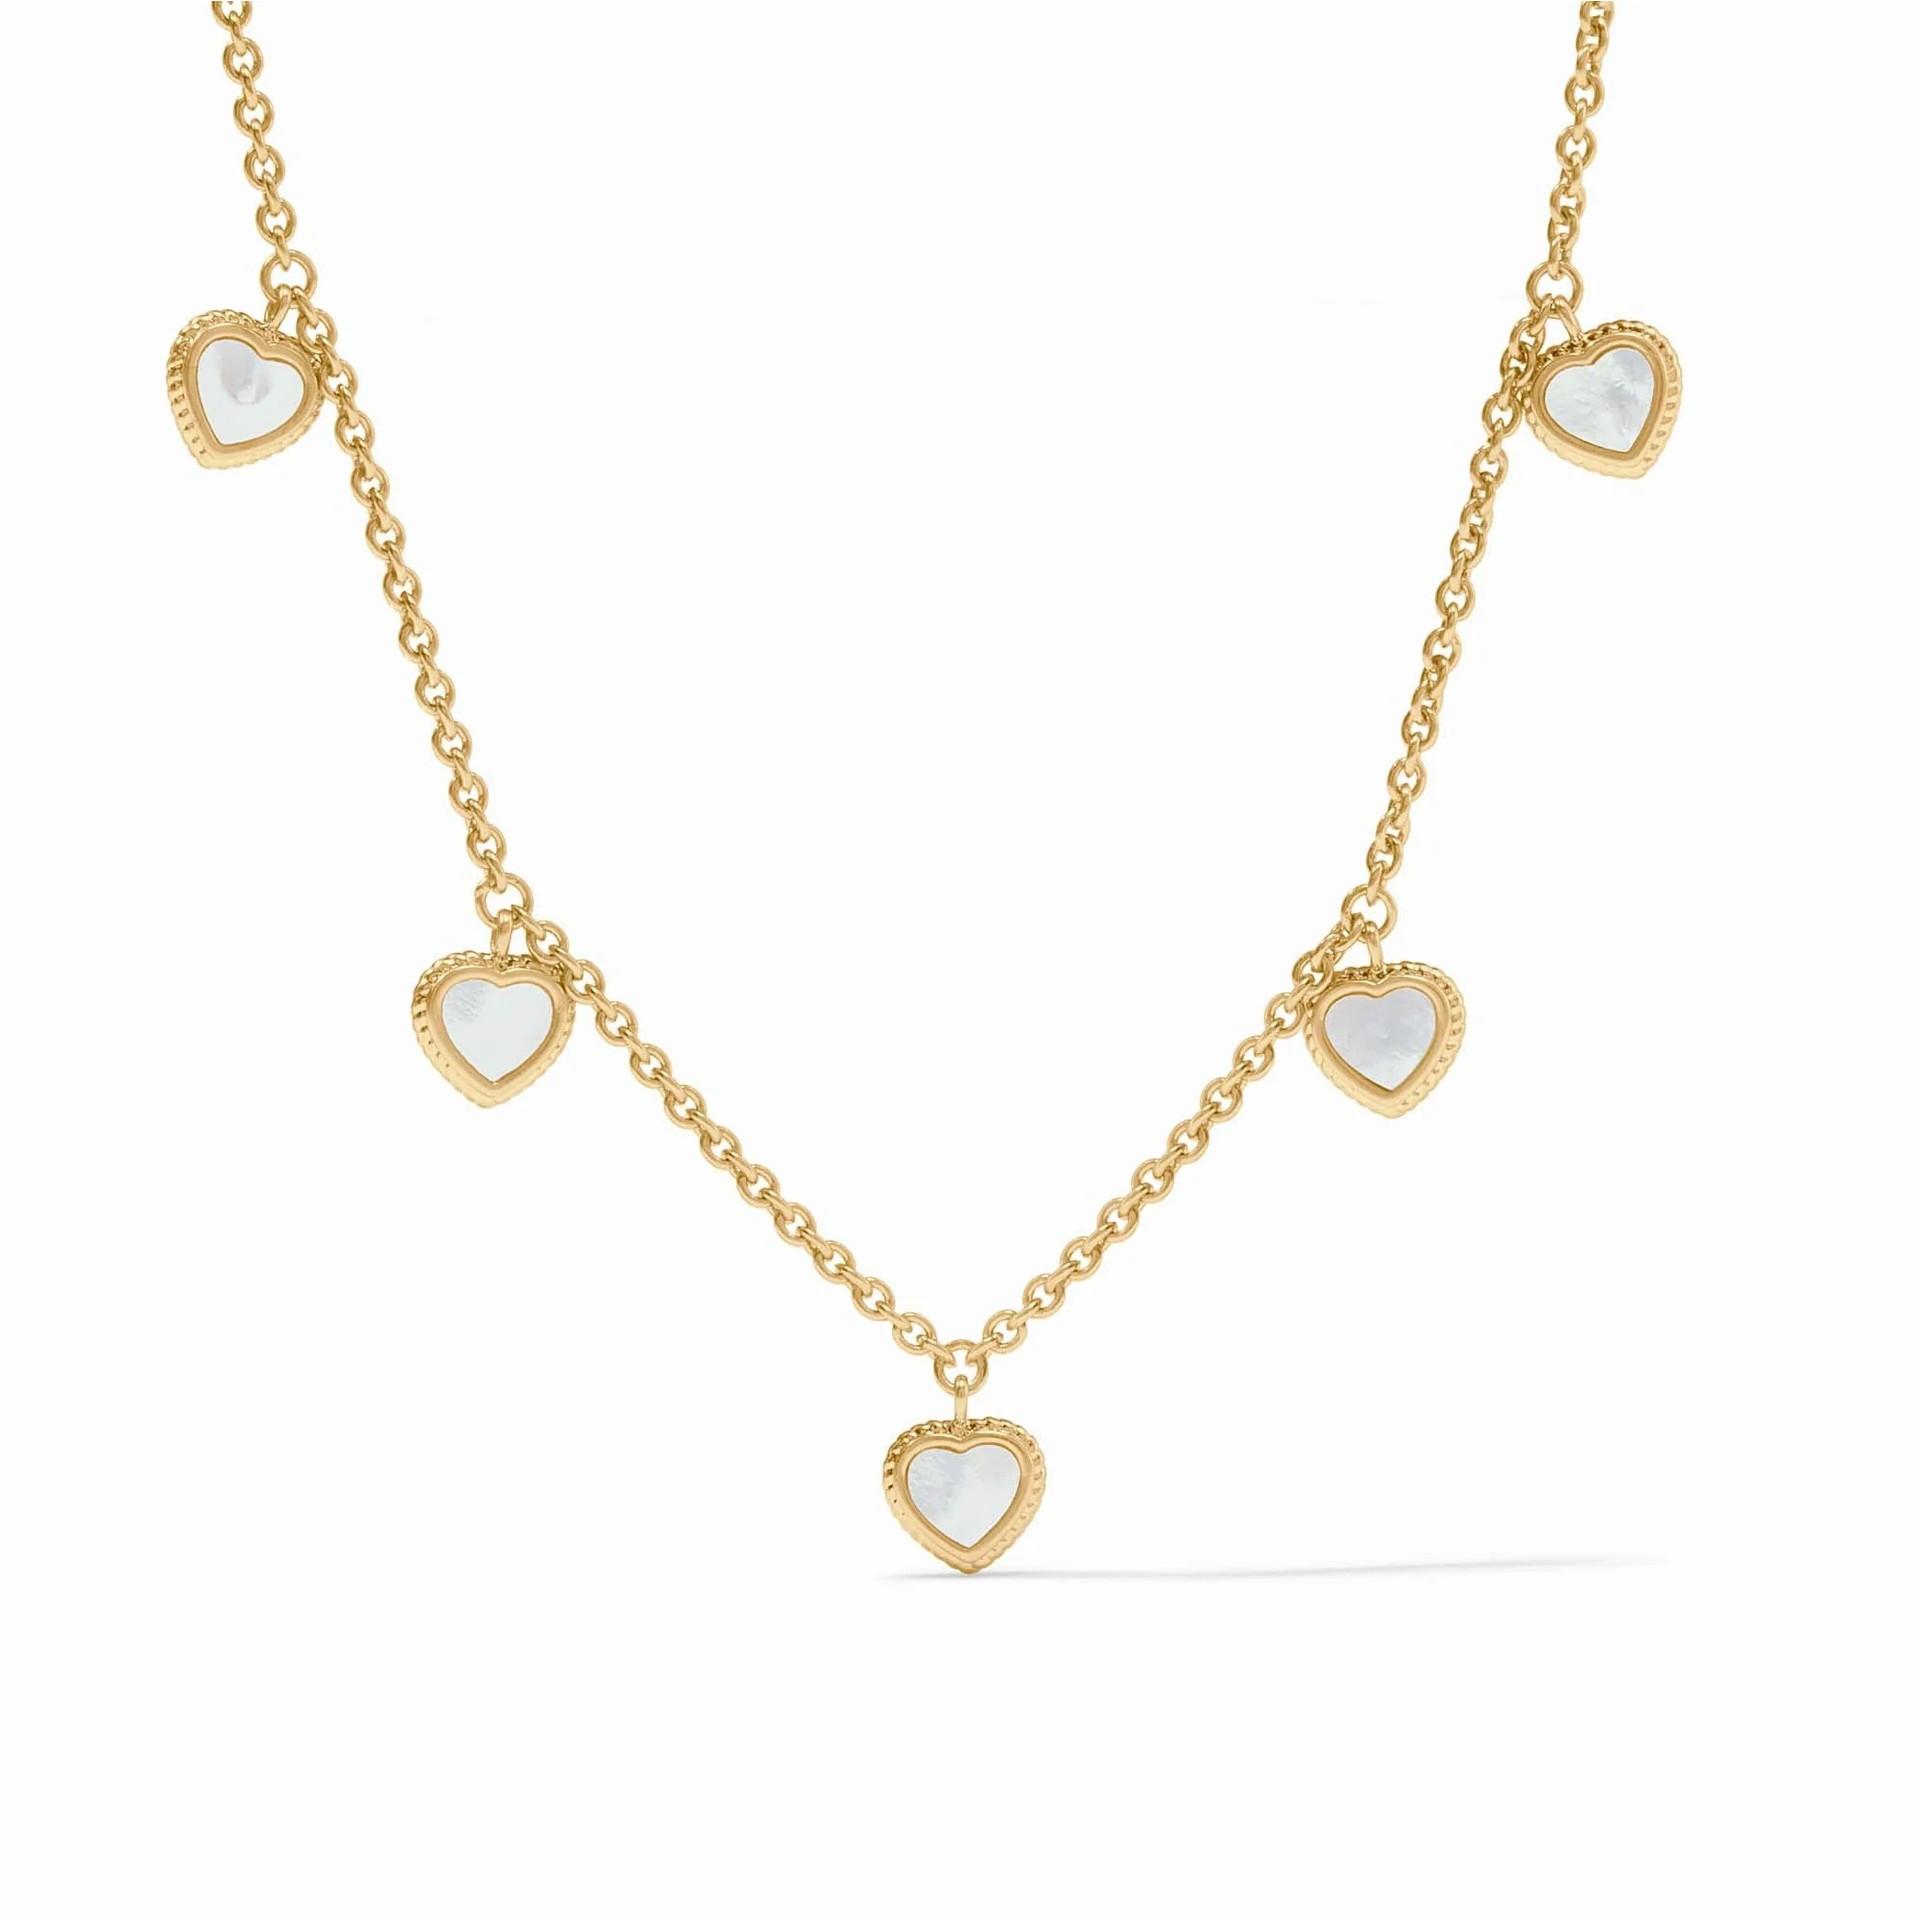 Julie Vos Delicate Heart Charm Necklace